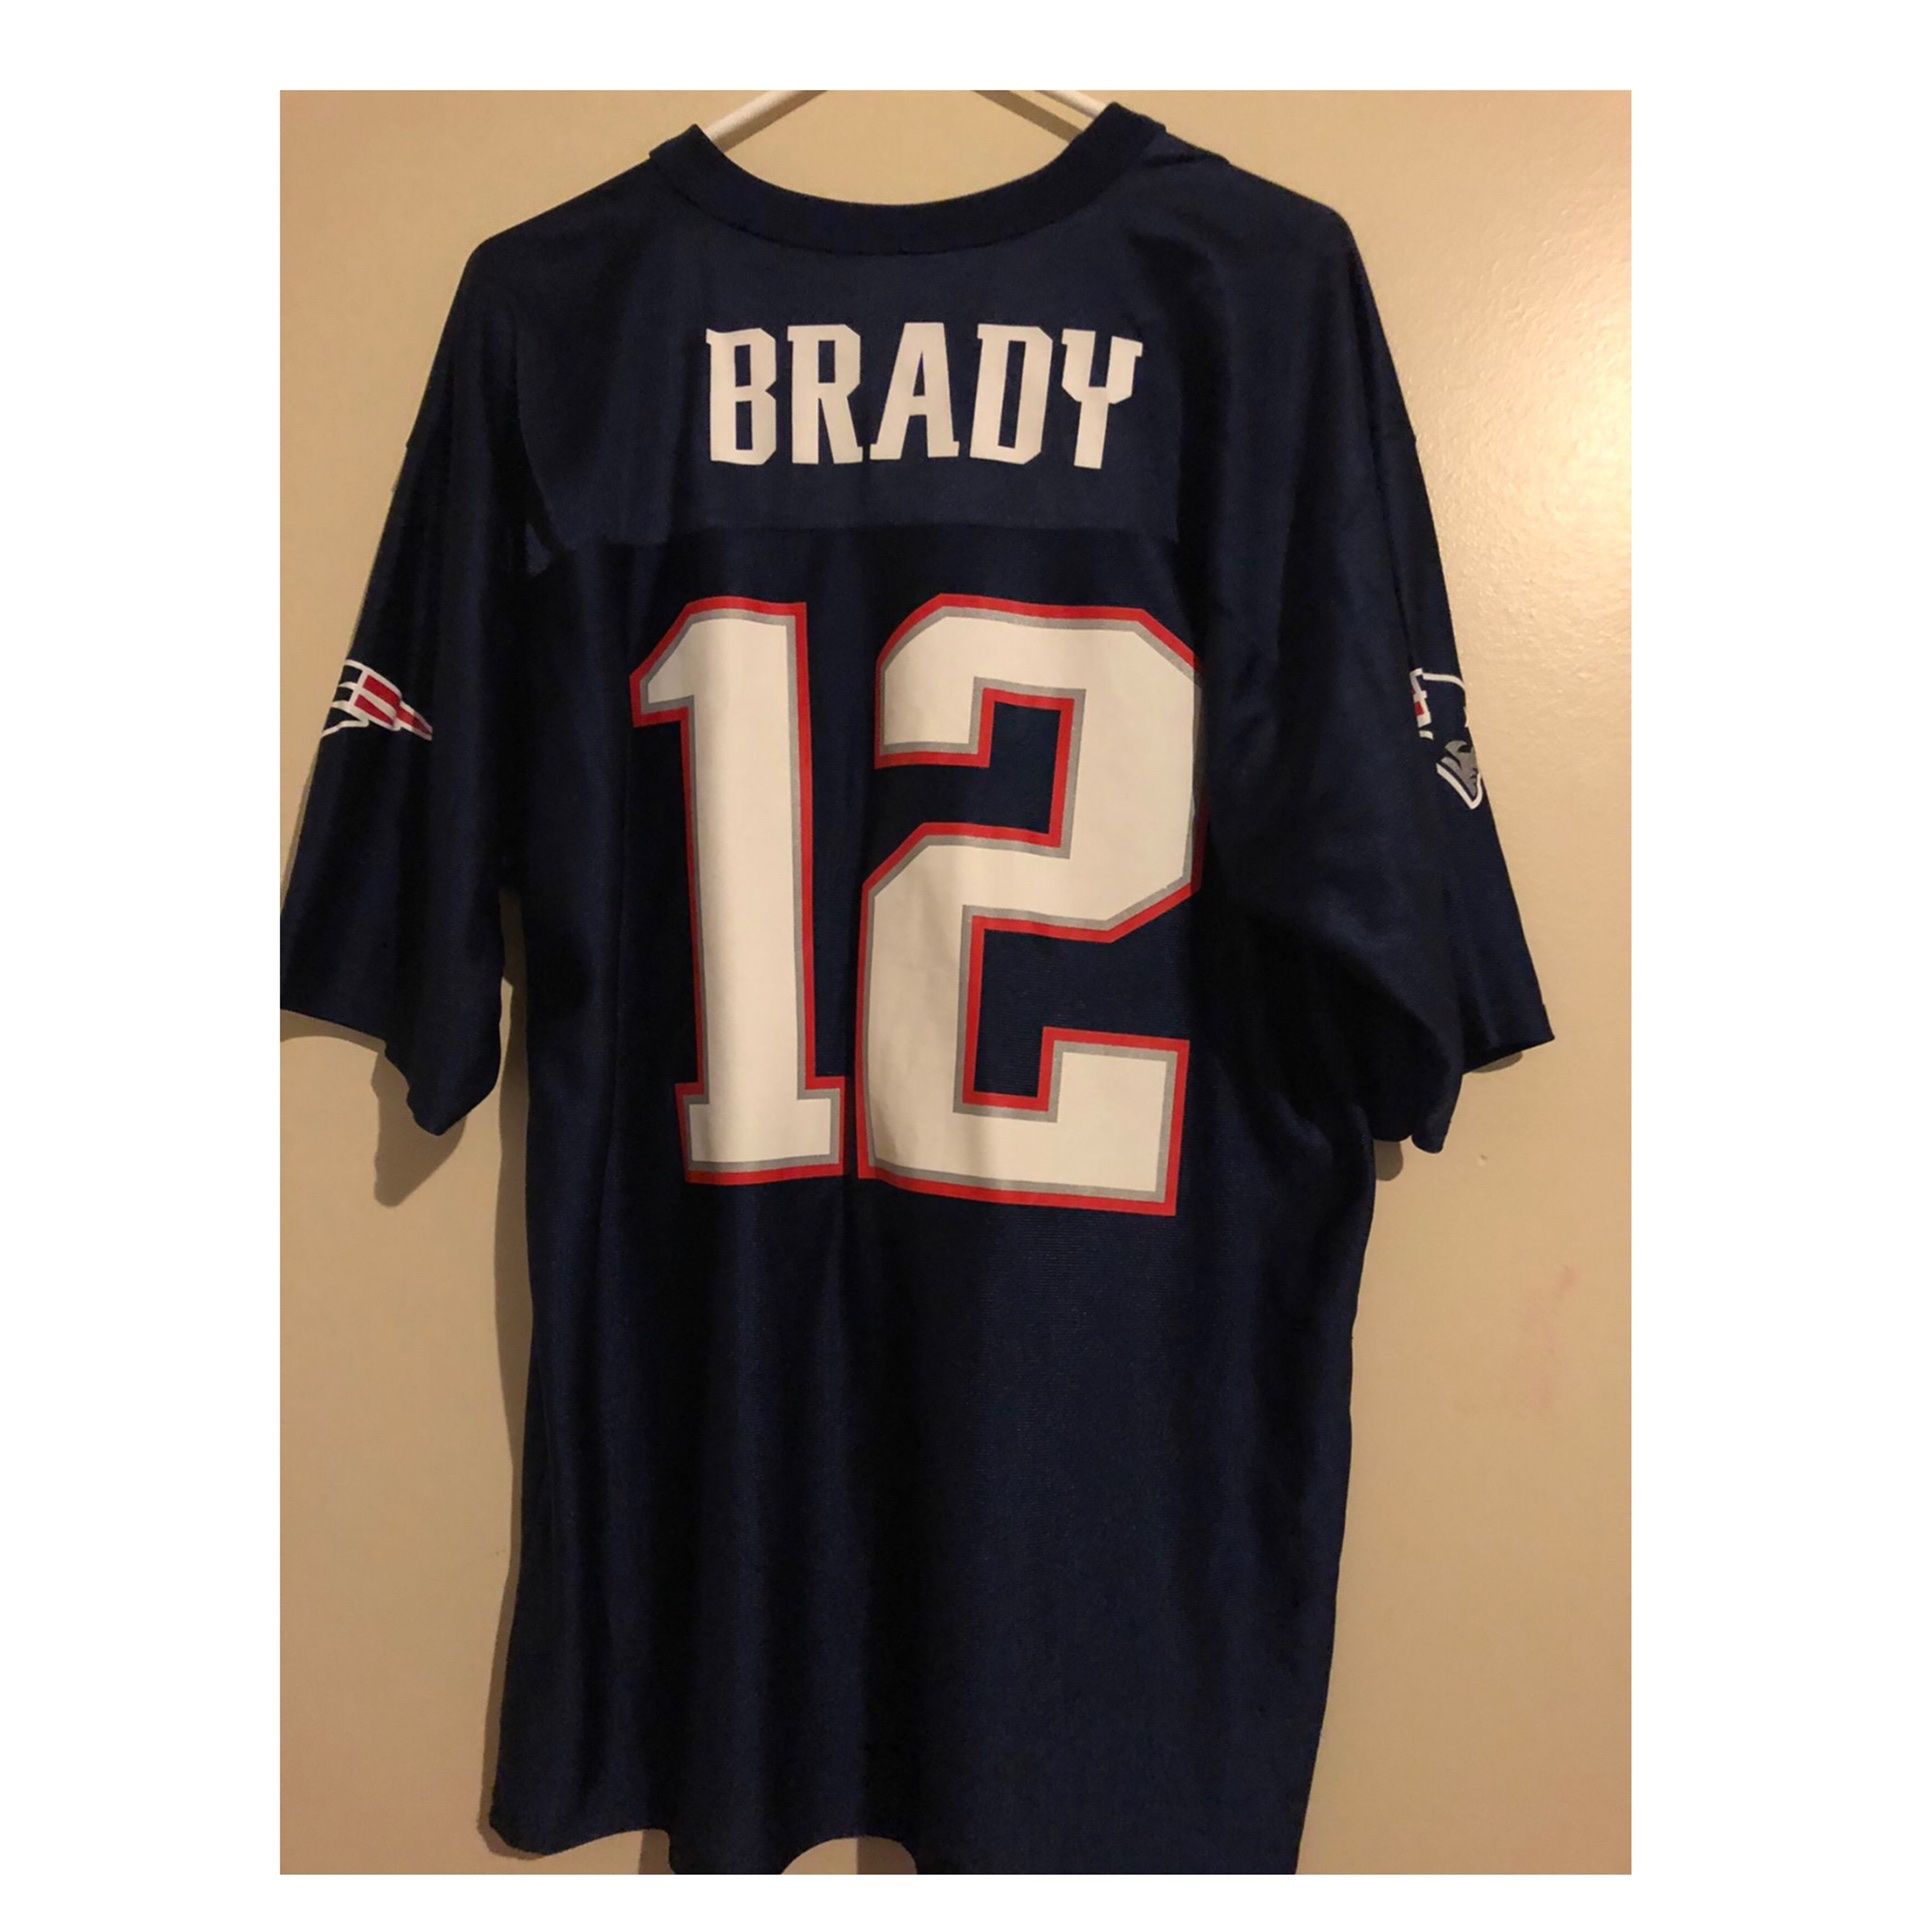 Navy blue New England Patriots Jersey NFL: Tom Brady 12, unisex size L. (Read The Description For More Info.)